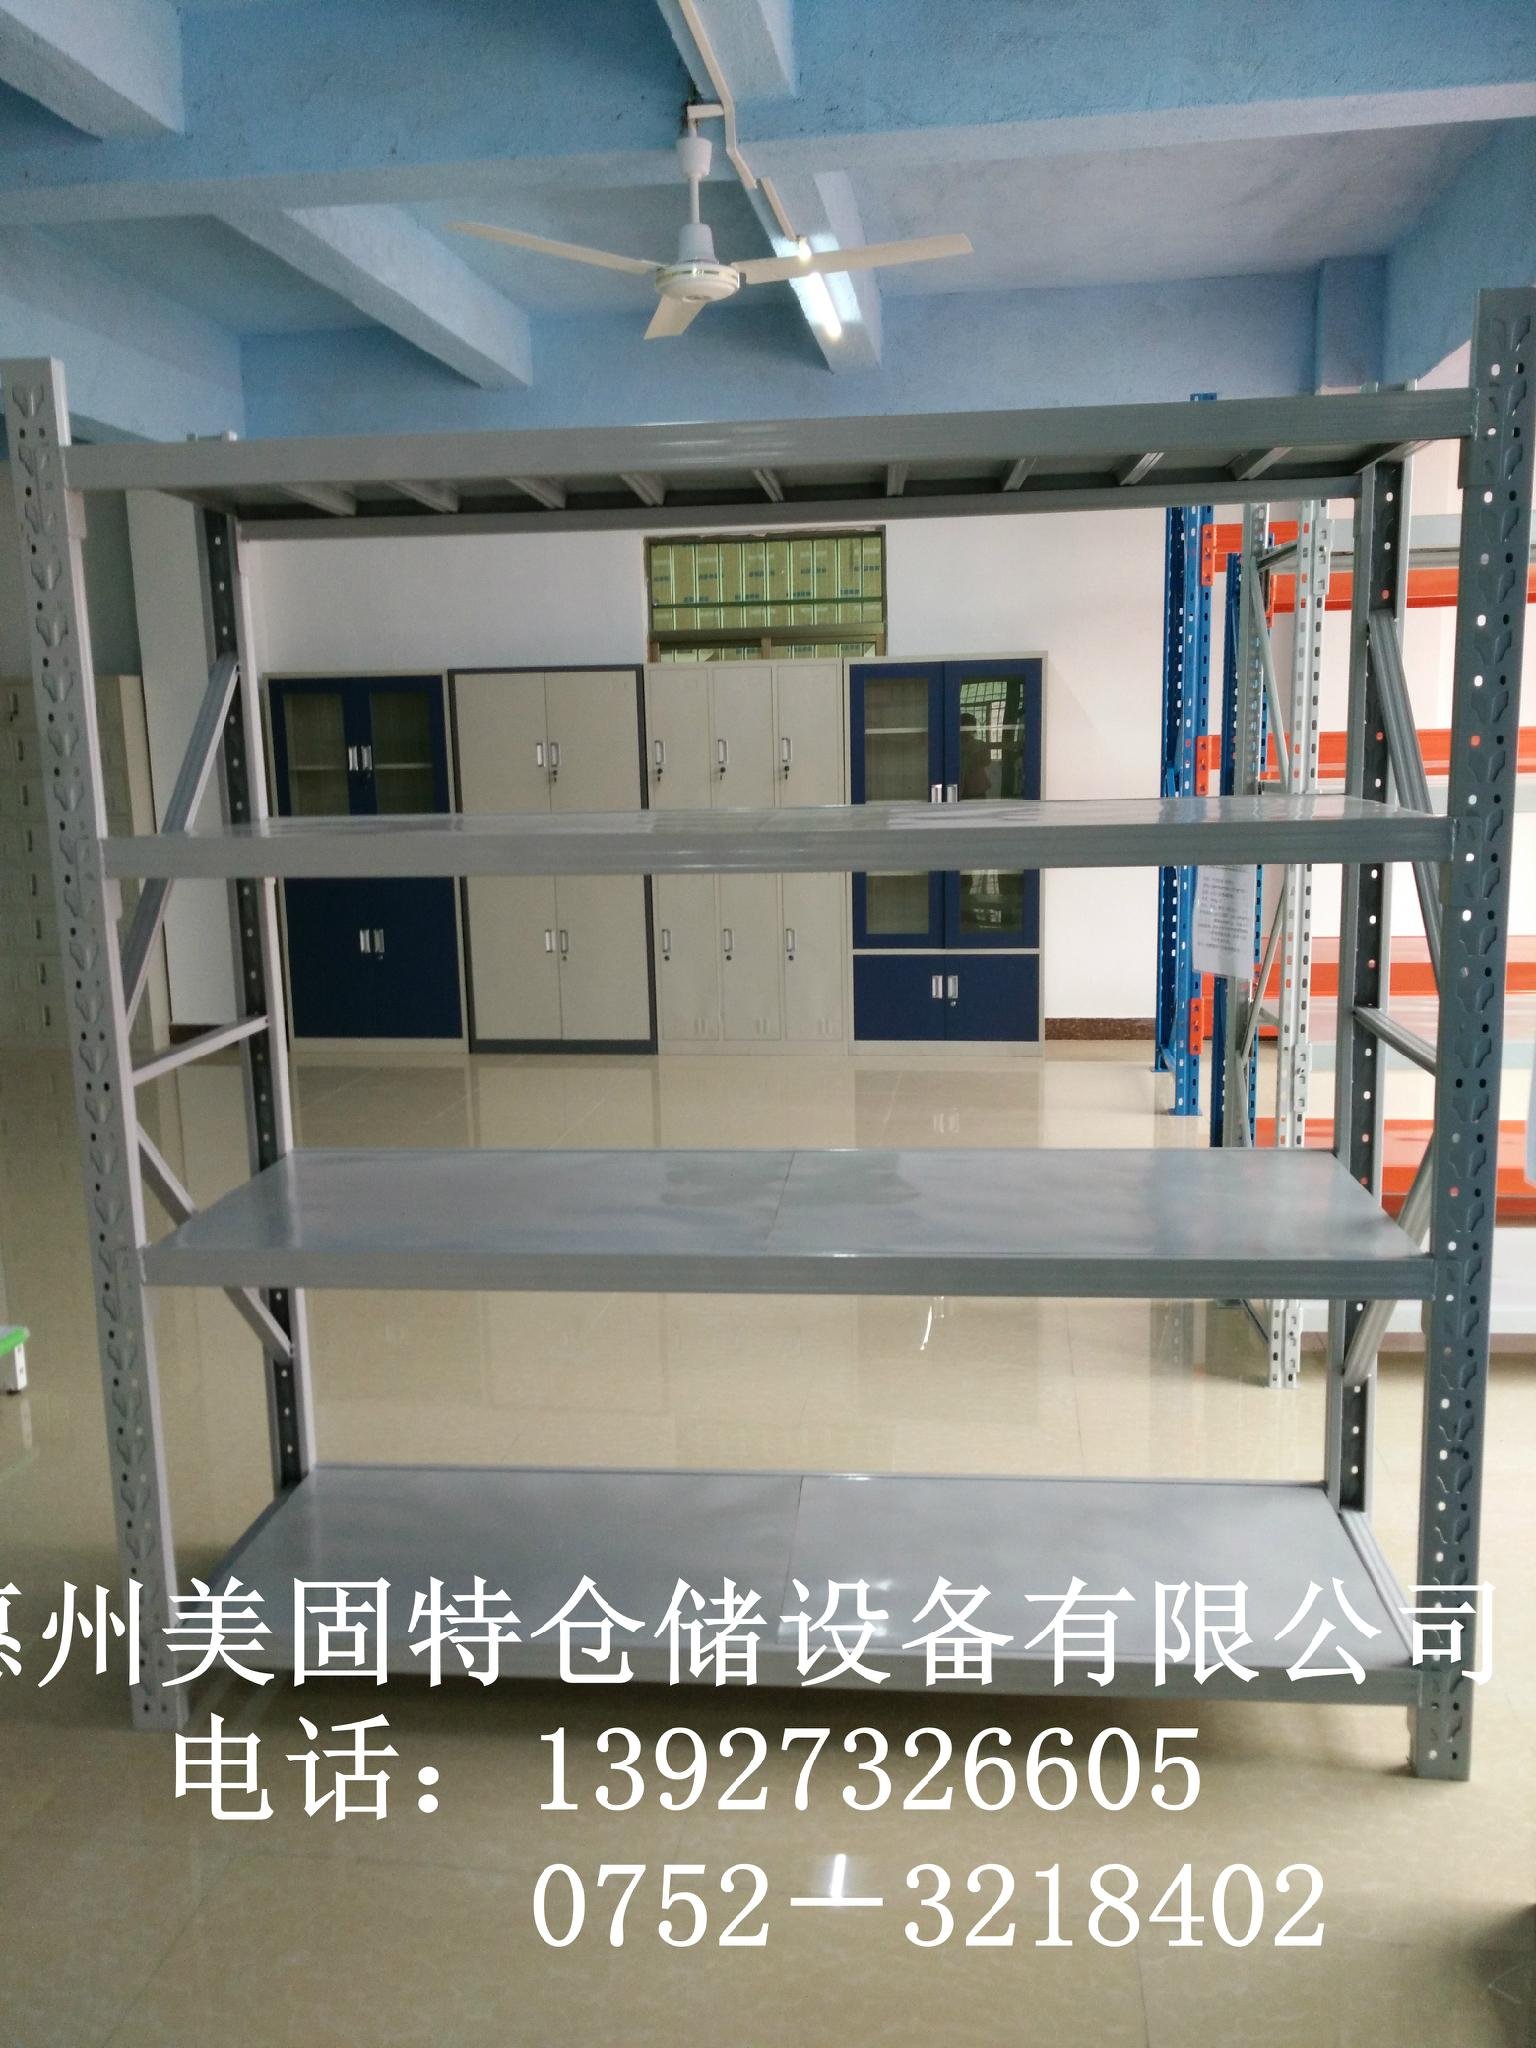 Huizhou medium storage shelves factory bearing 200 kg 4